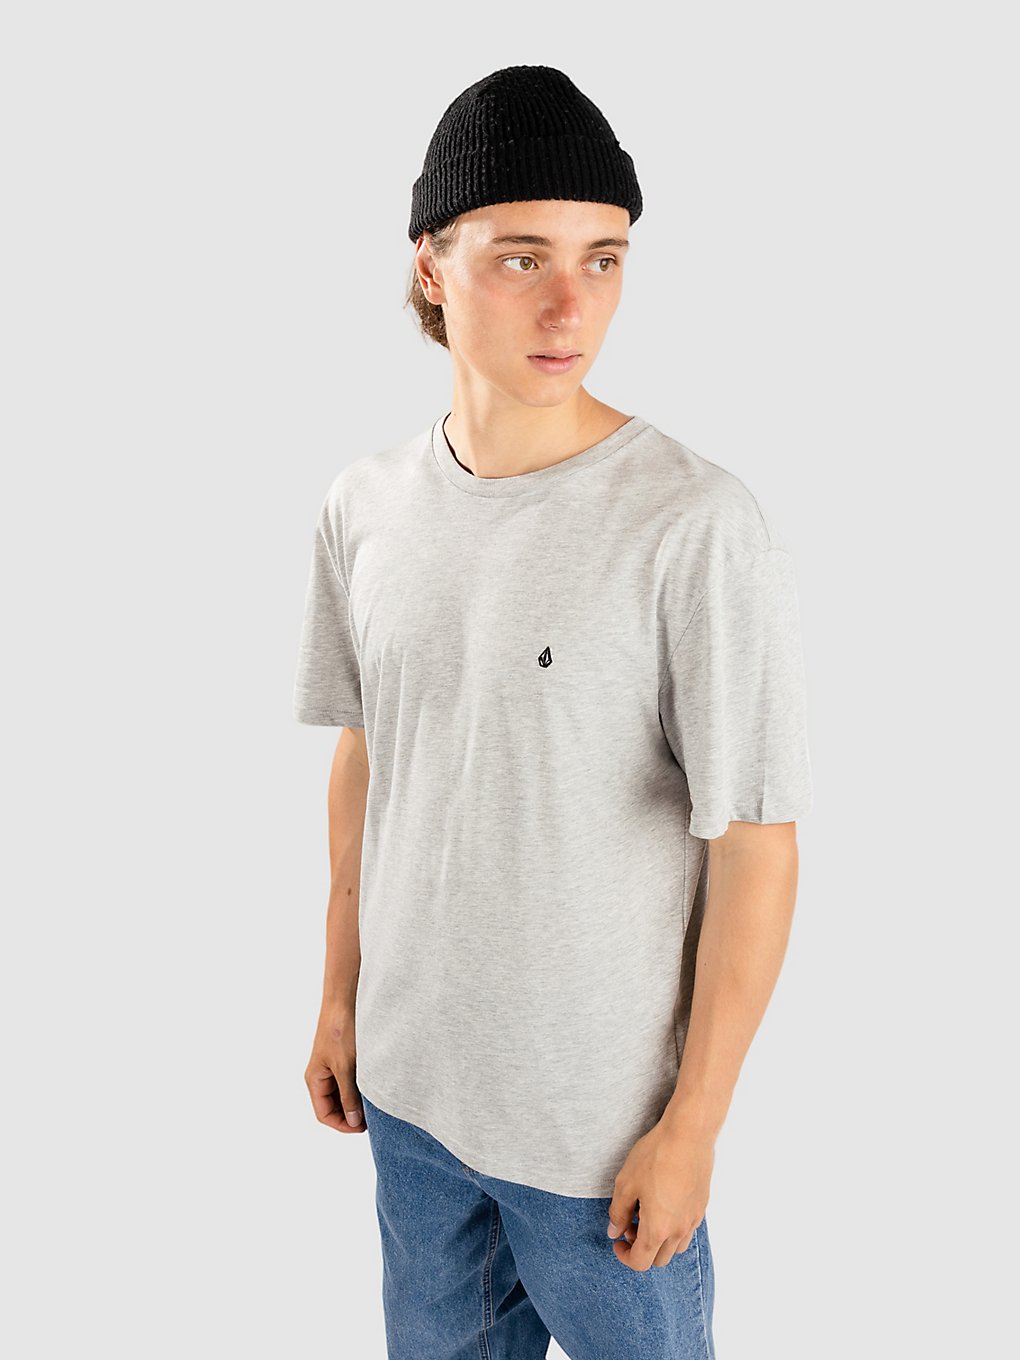 Volcom Stone Blanks Bsc T-Shirt heather grey kaufen